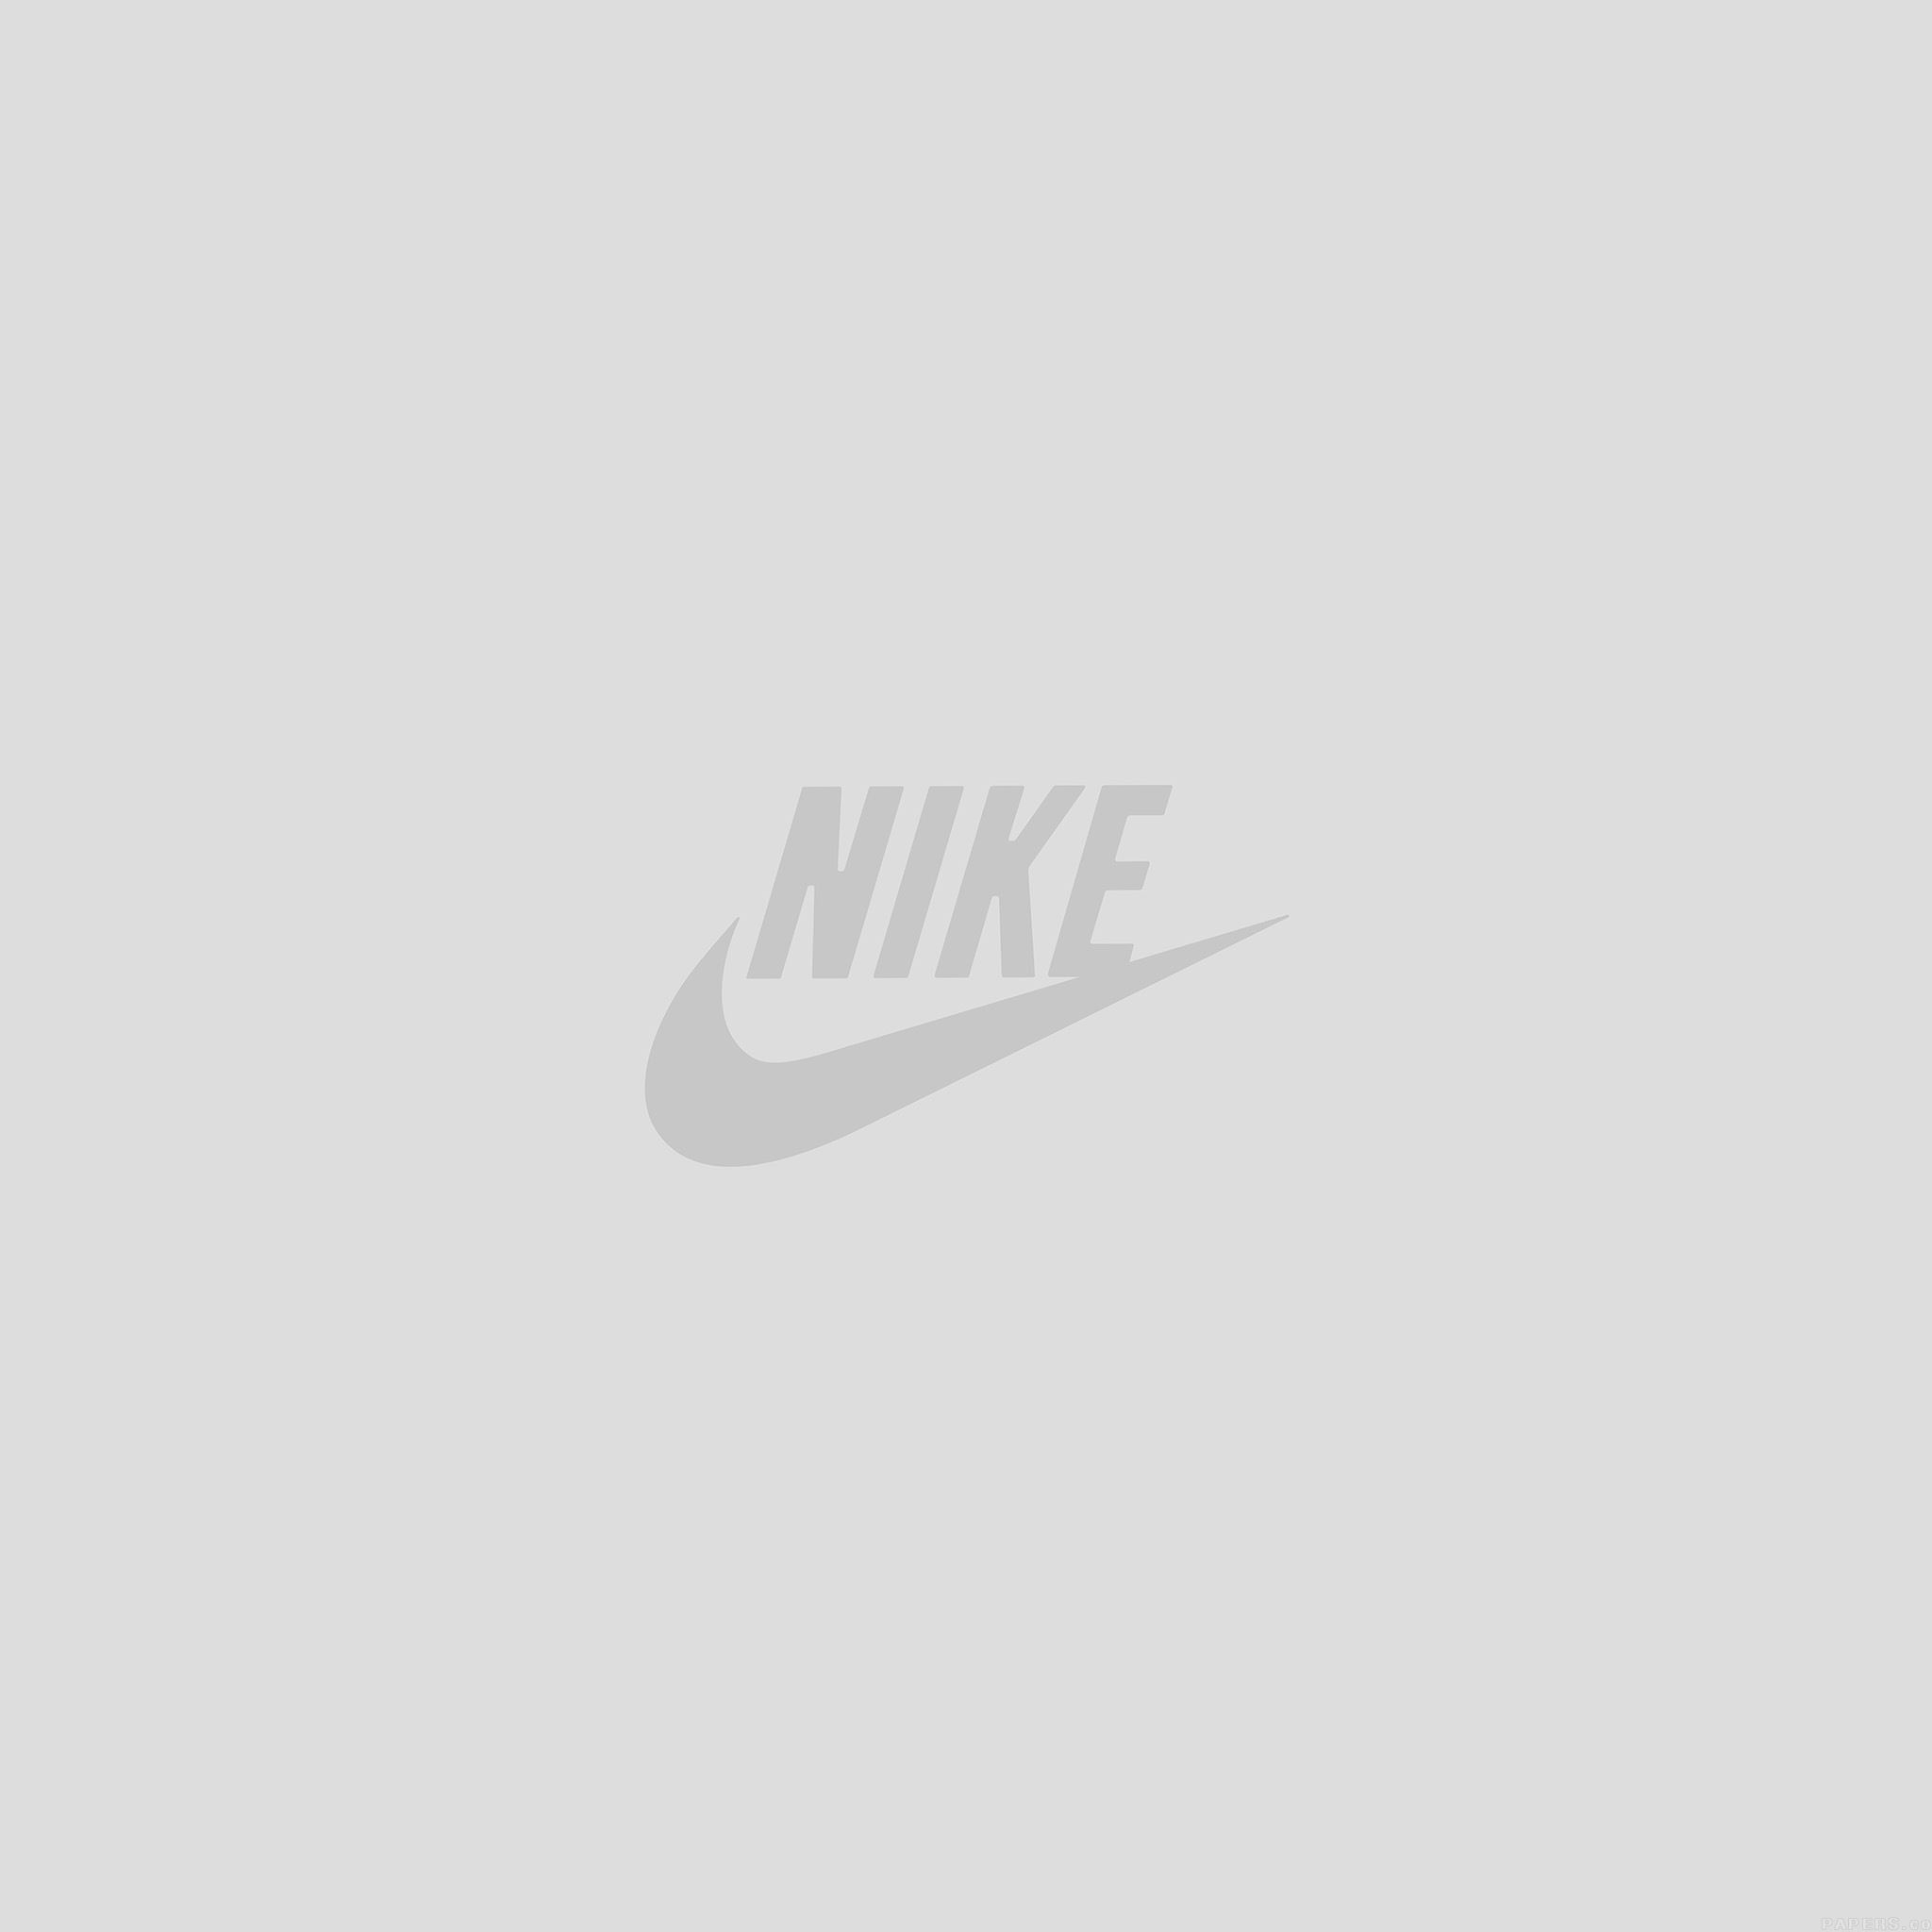 Nike Logo Sports Art Minimal Simple White iPad Air wallpaper 